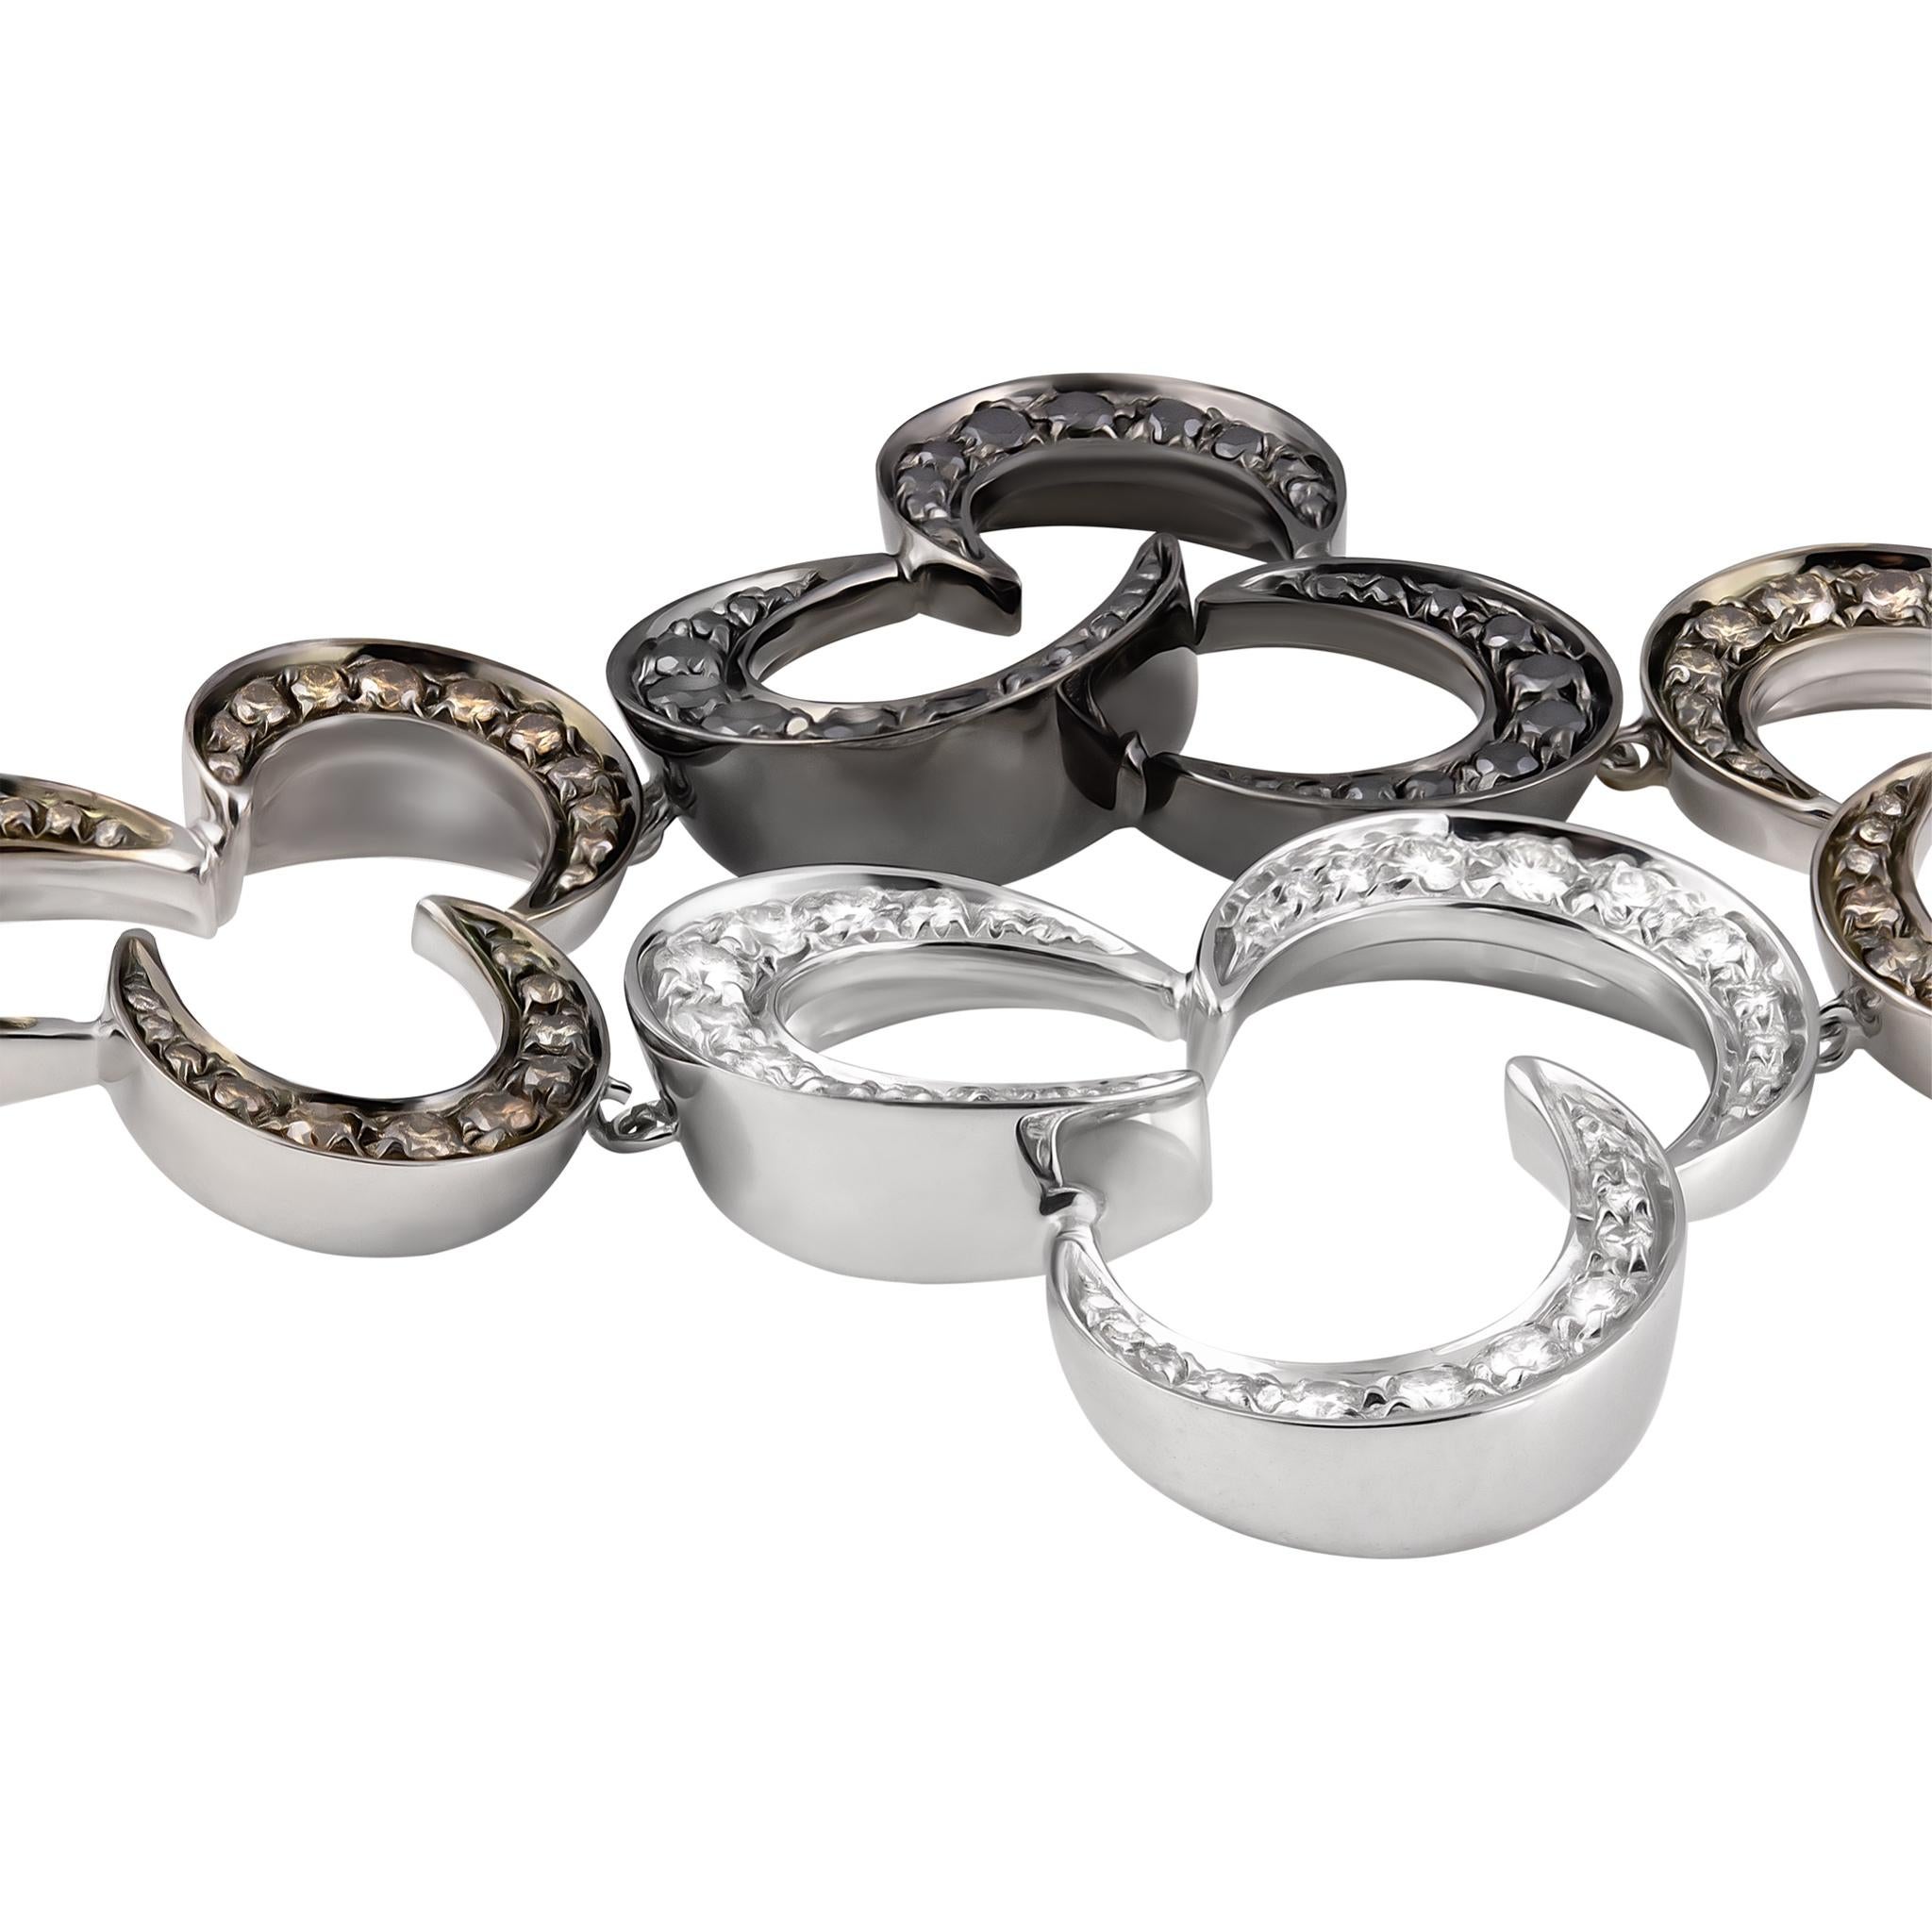 IO SI Bracelet
18K White Gold
Black & White Diamonds: 2.45ctw
Italian made
Retail price: $27,000.00
Model number: 90095BR120
SKU: BLU01887